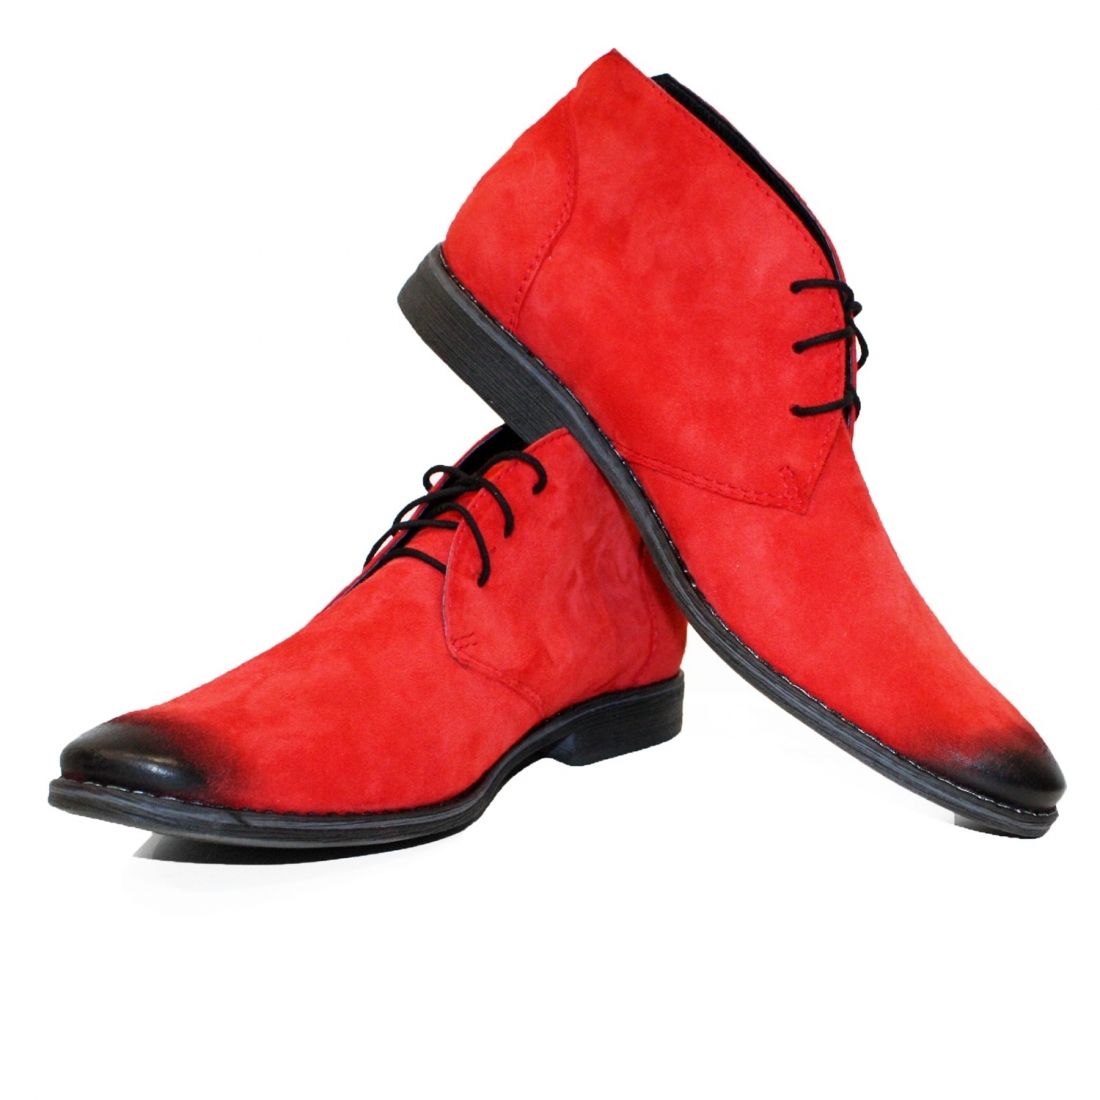 Modello Huzzello - Desert Boots - Handmade Colorful Italian Leather Shoes